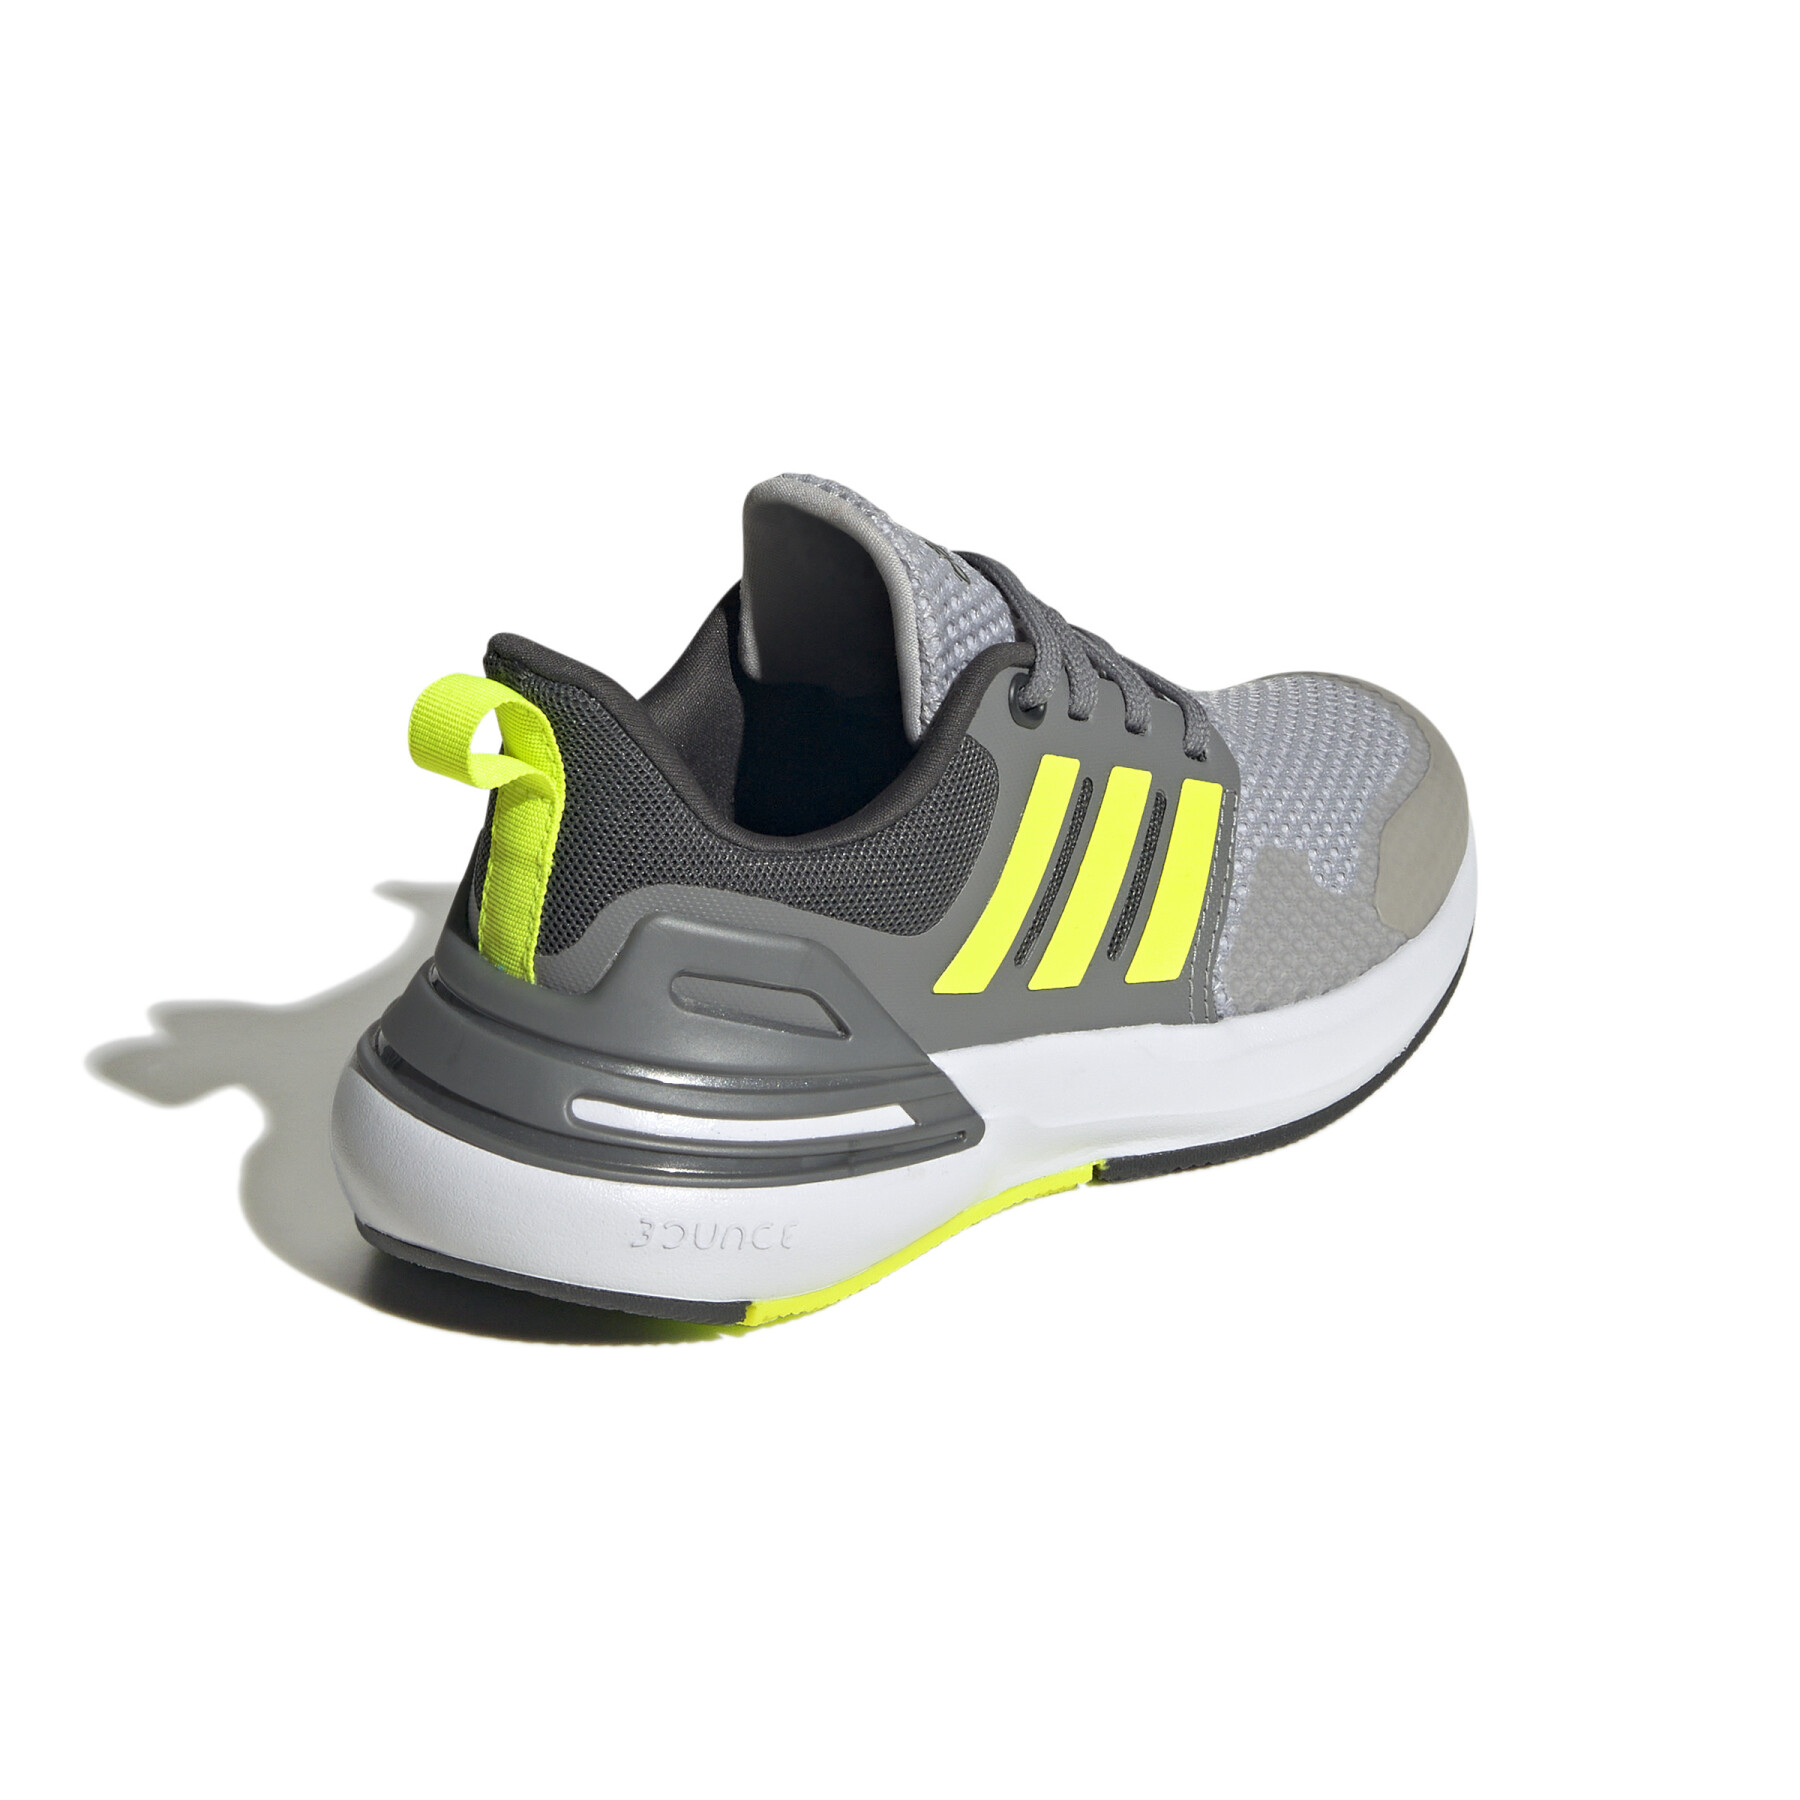 Chaussures de running adidas RapidaSport